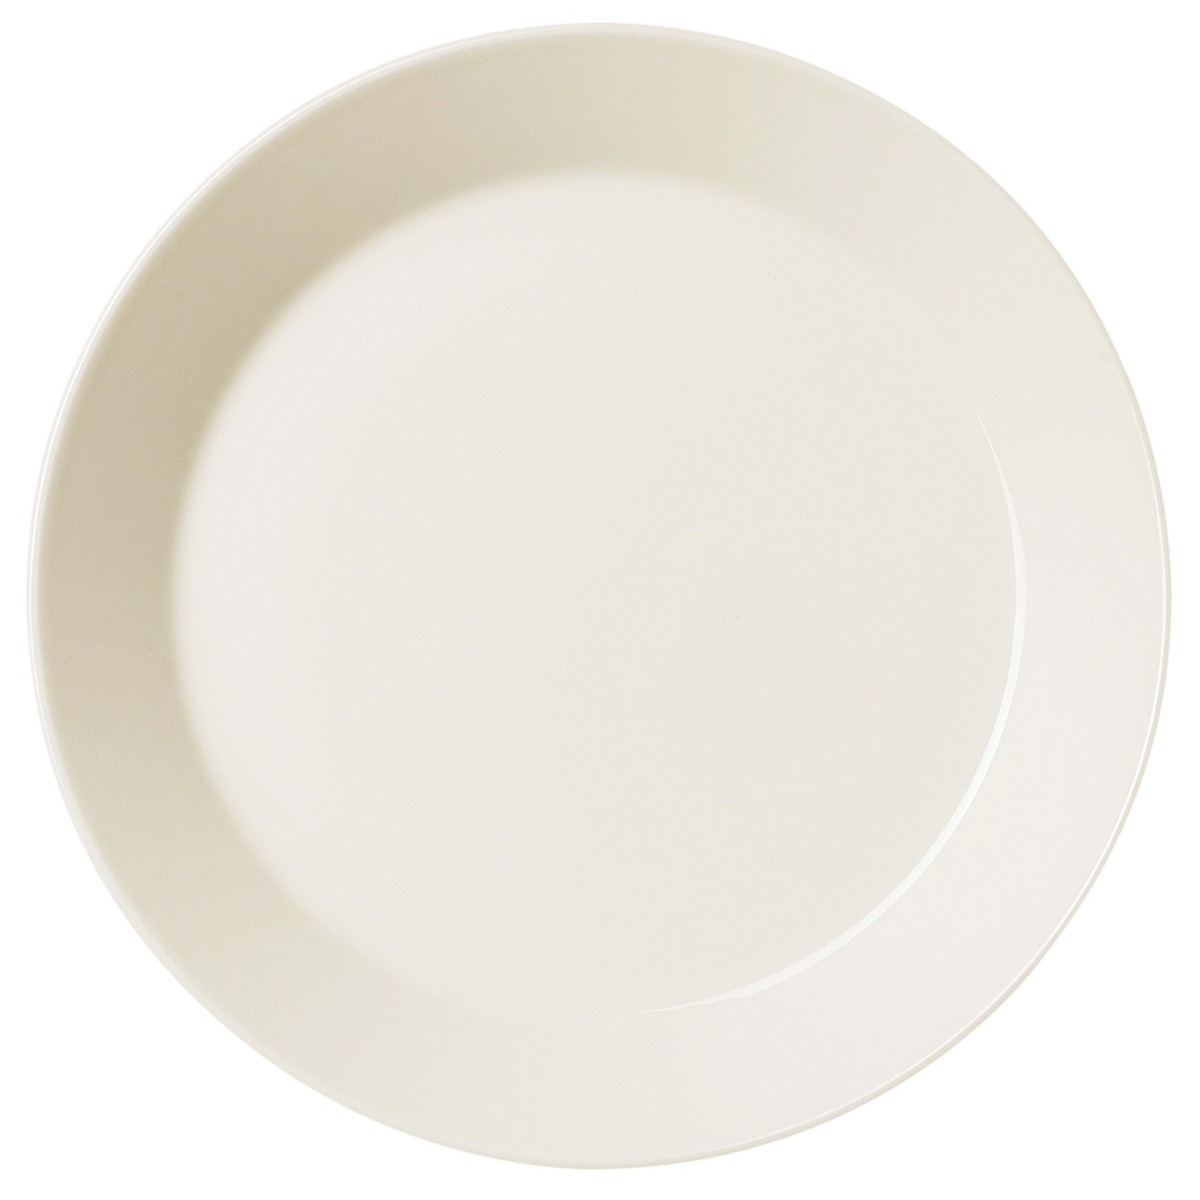 Ø26cm - Teema plate - white - 1005470